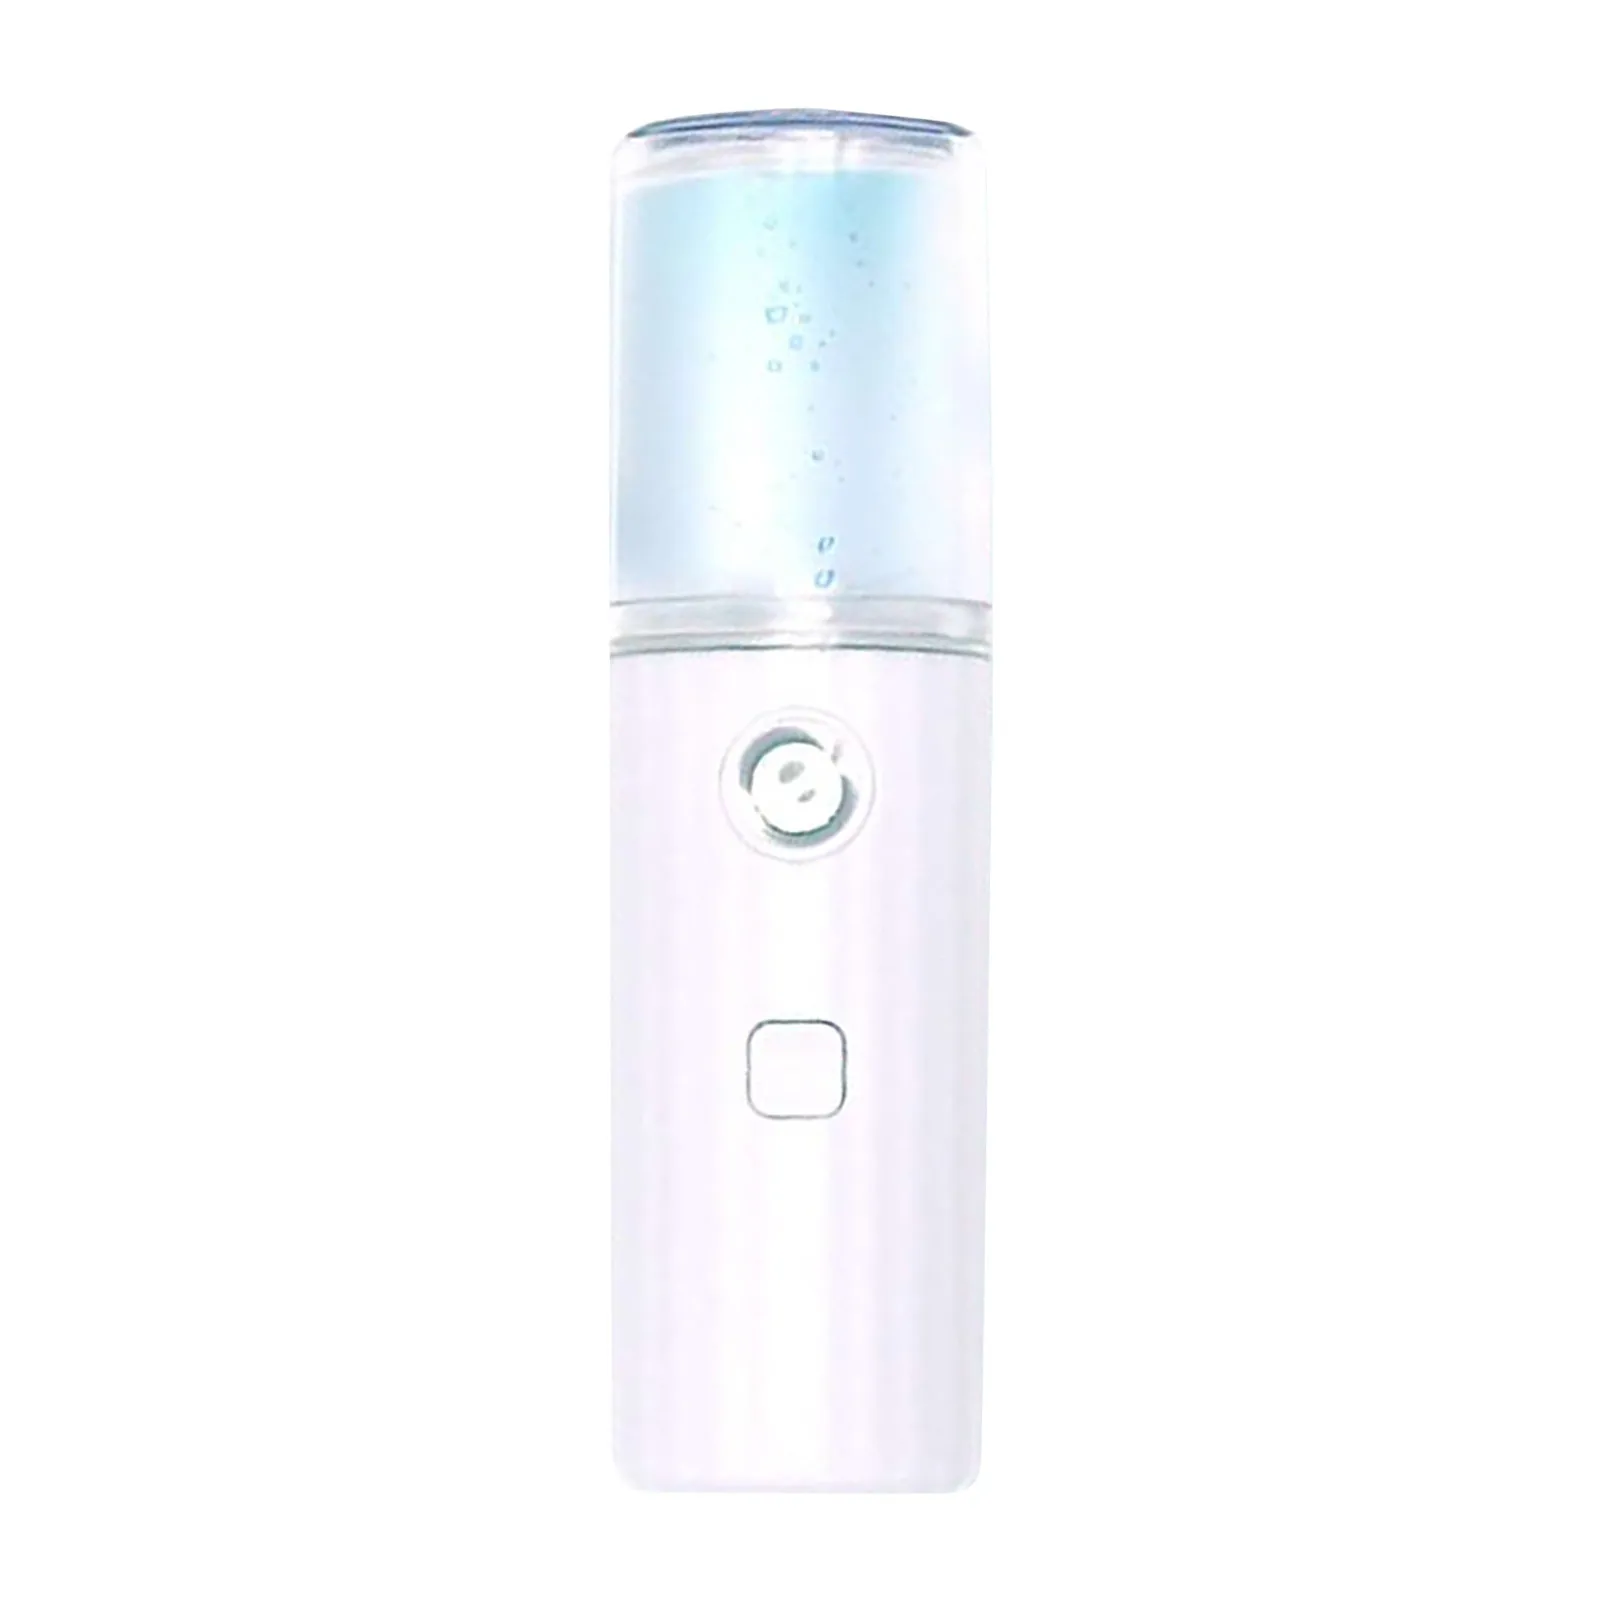 

Alcohol Disinfection Spray Face Sprayers Nano Moisturizing Humidifier Air Hot Mist Steamer Small Portable Beauty Instrument